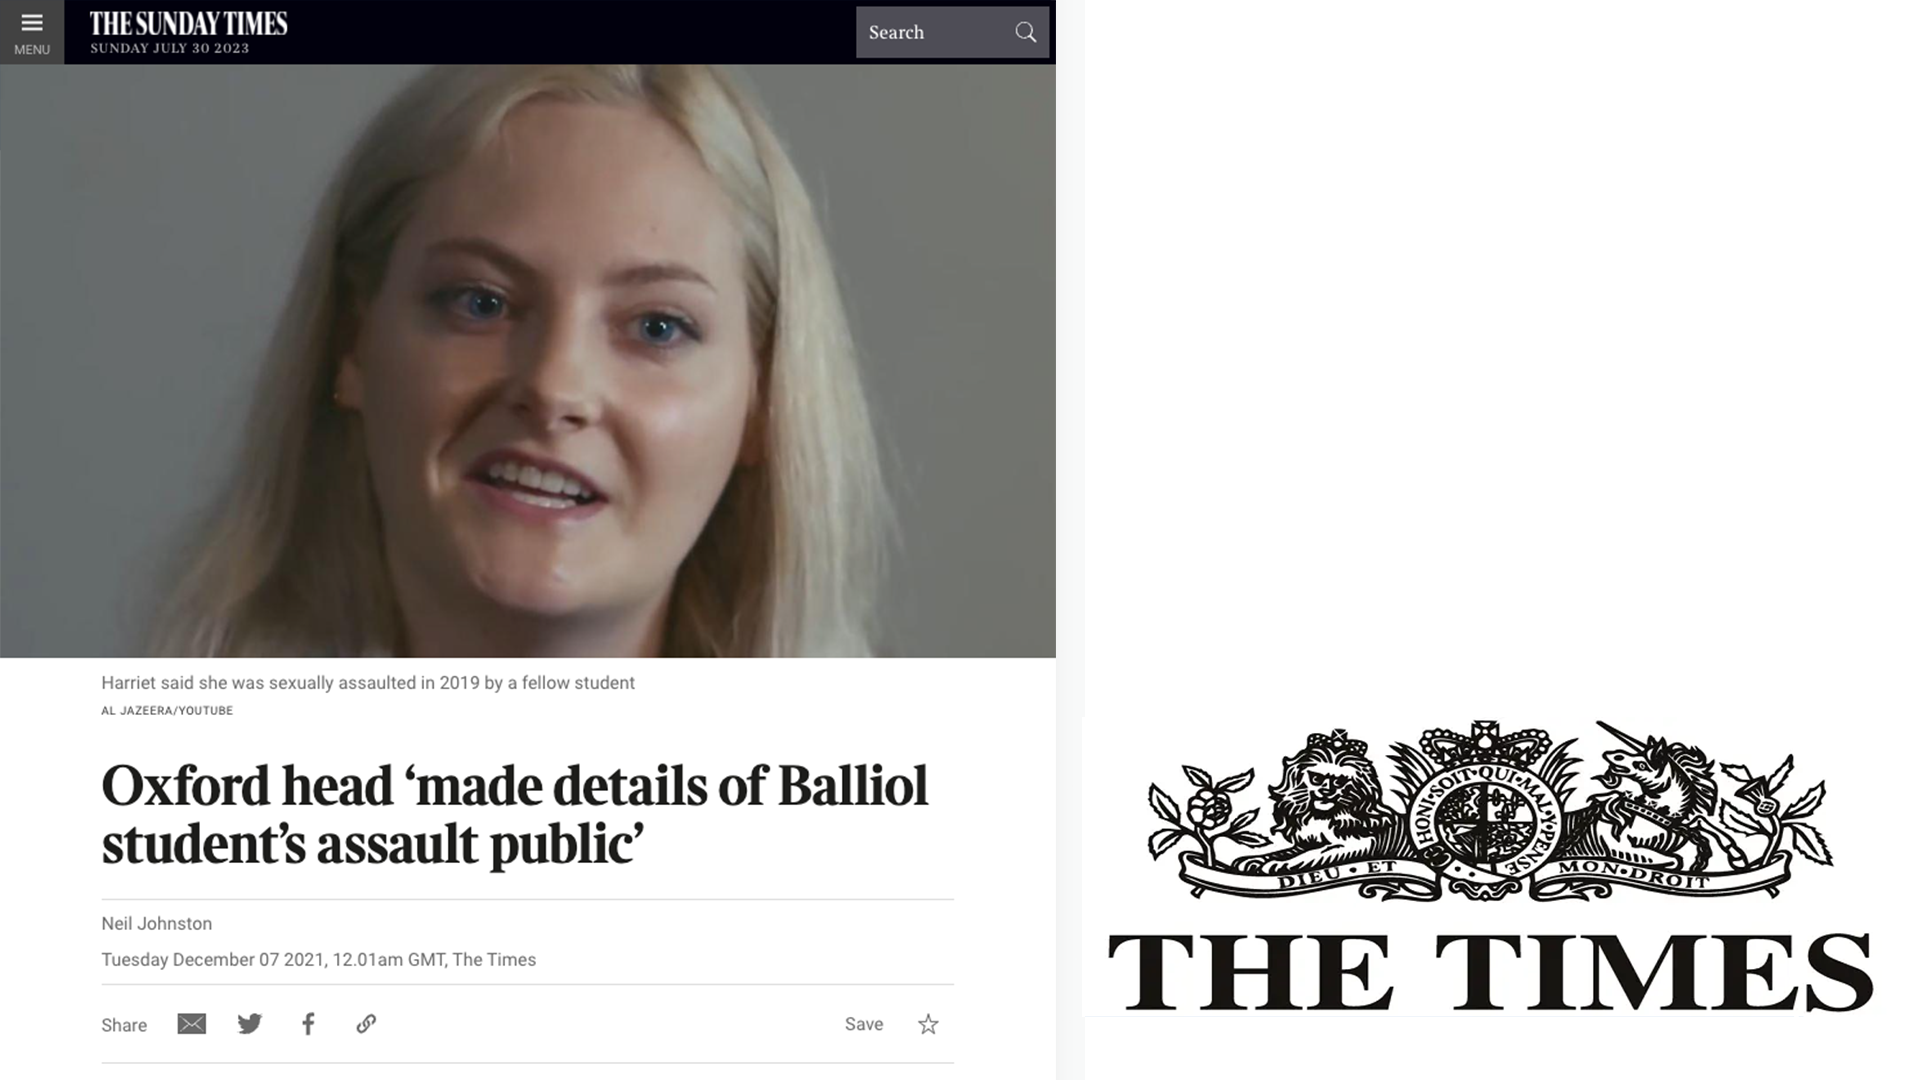 Oxford head ‘made details of Balliol student’s assault public’